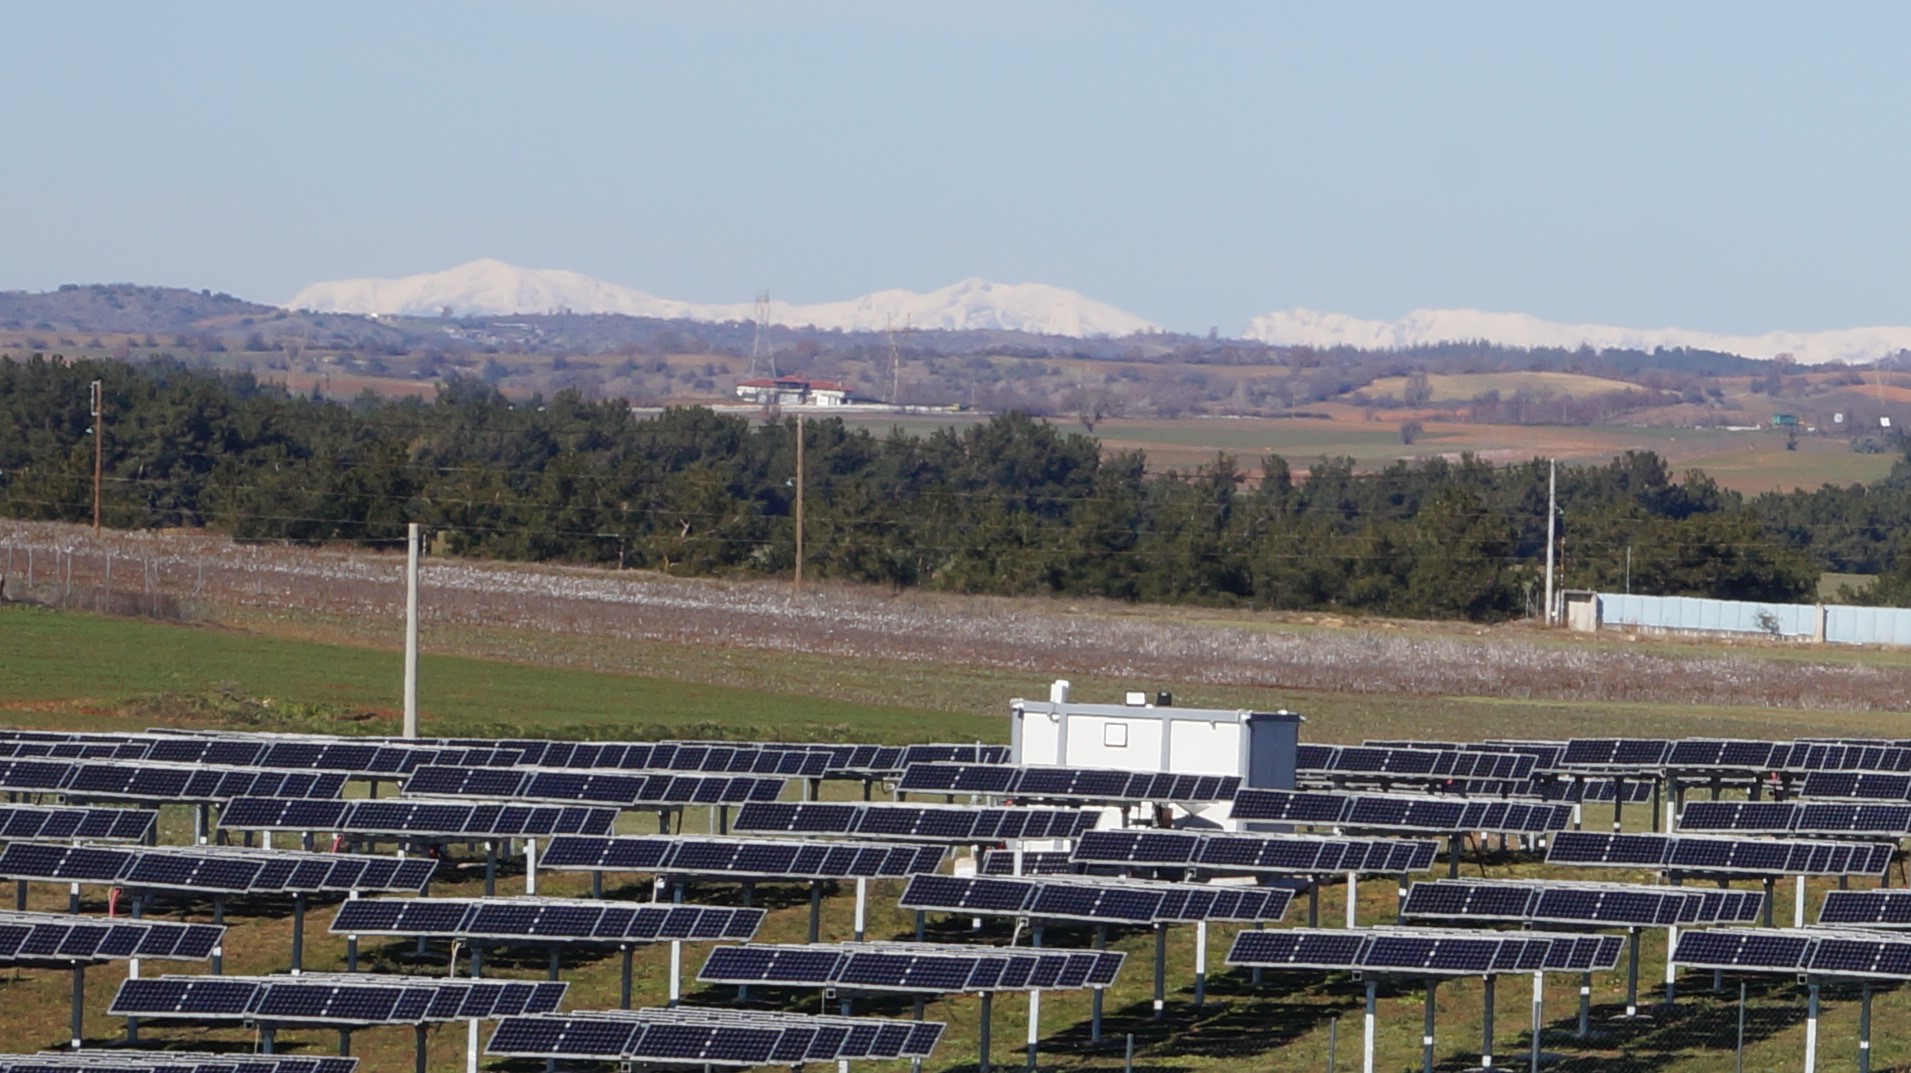 27.01.2022 - SolarKapital - New investment in Greece  